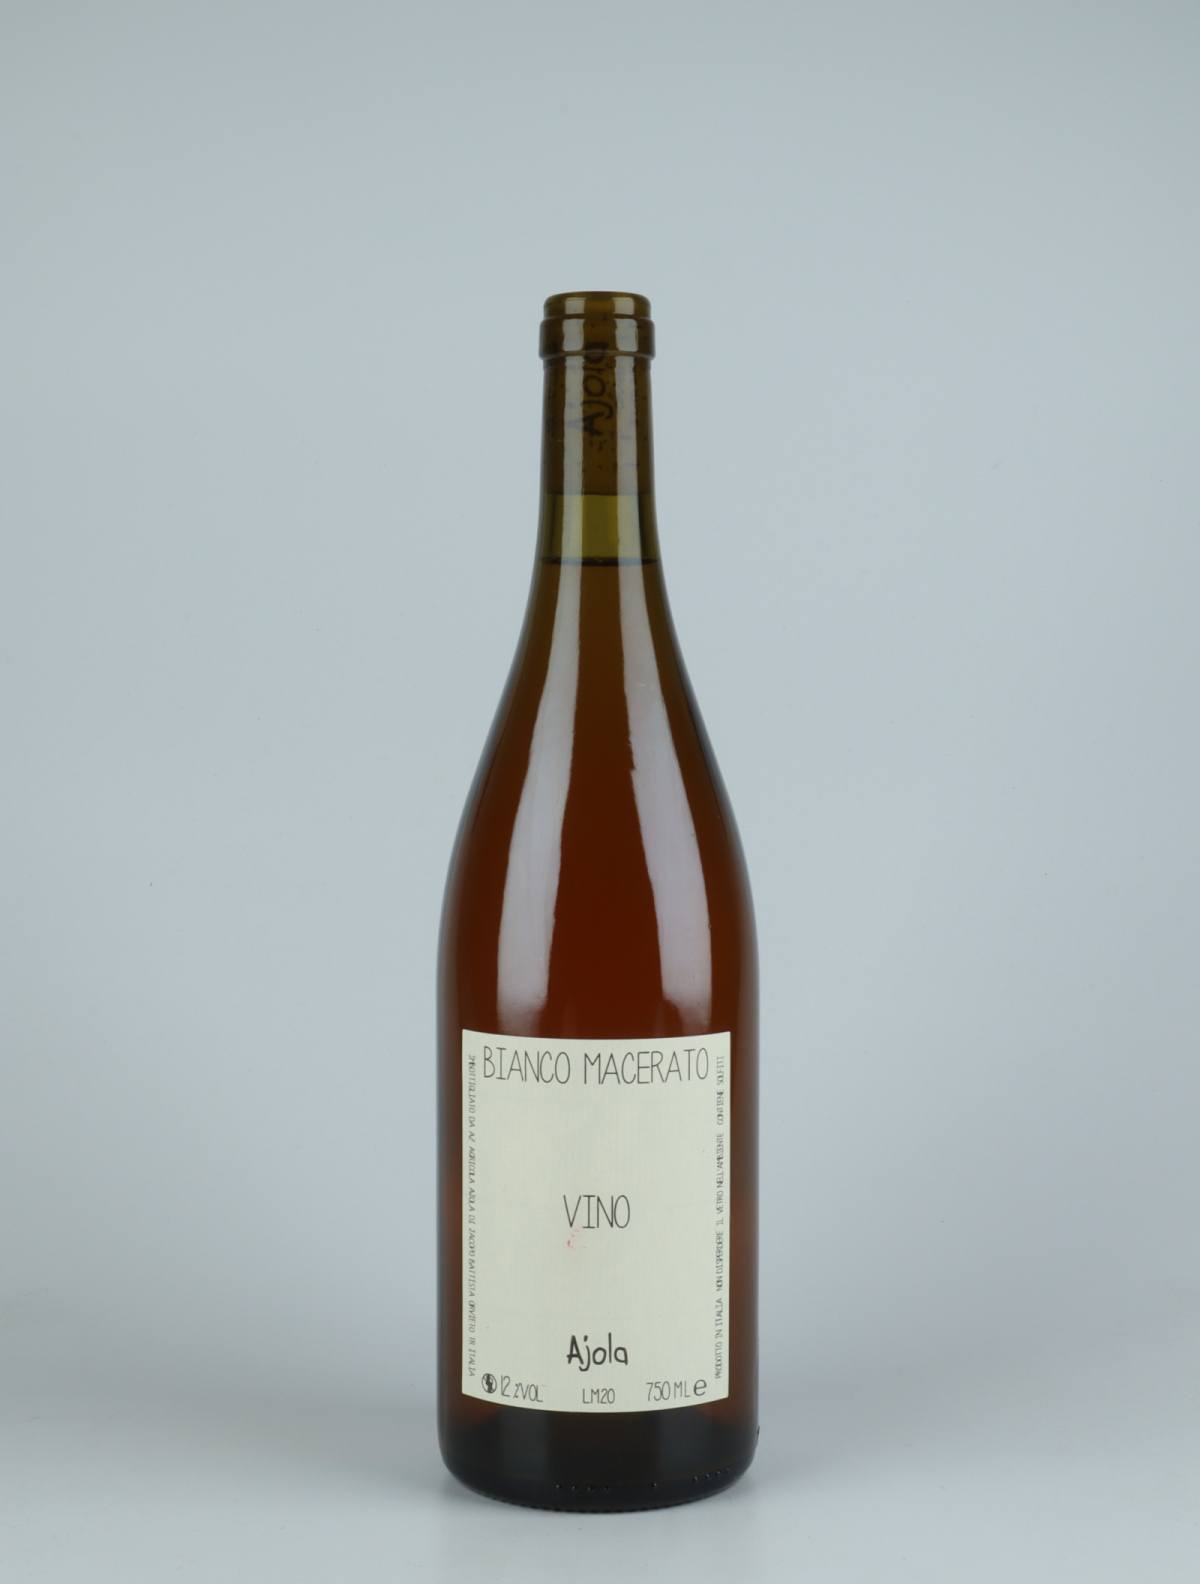 En flaske 2020 Vino Bianco Macerato Orange vin fra Ajola, Umbrien i Italien